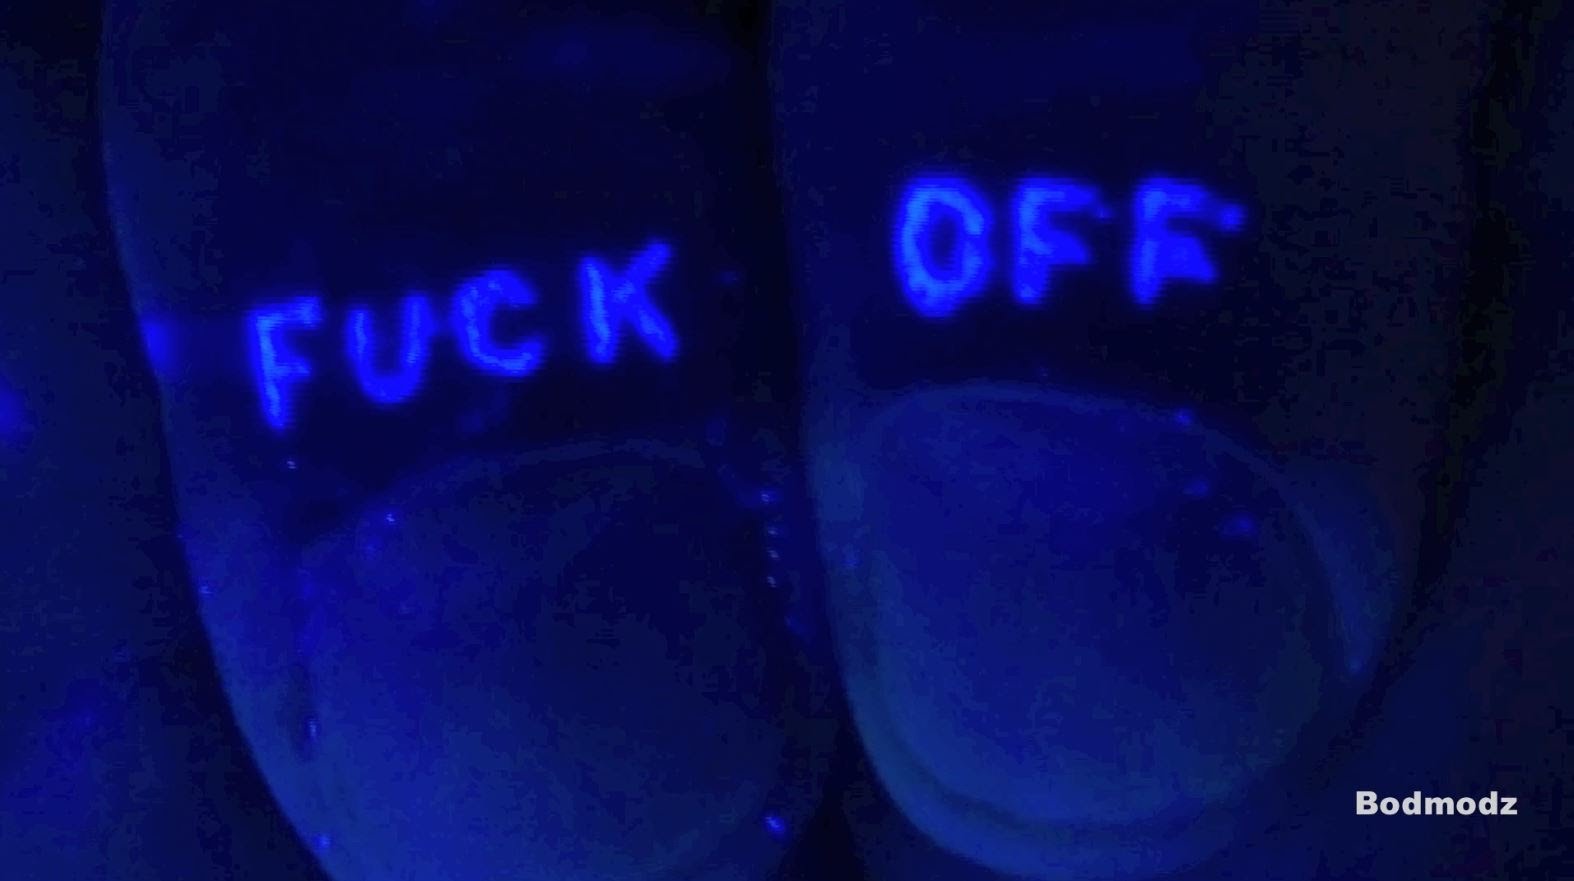 Blacklight Fuck Off Lettering Tattoo On Fingers